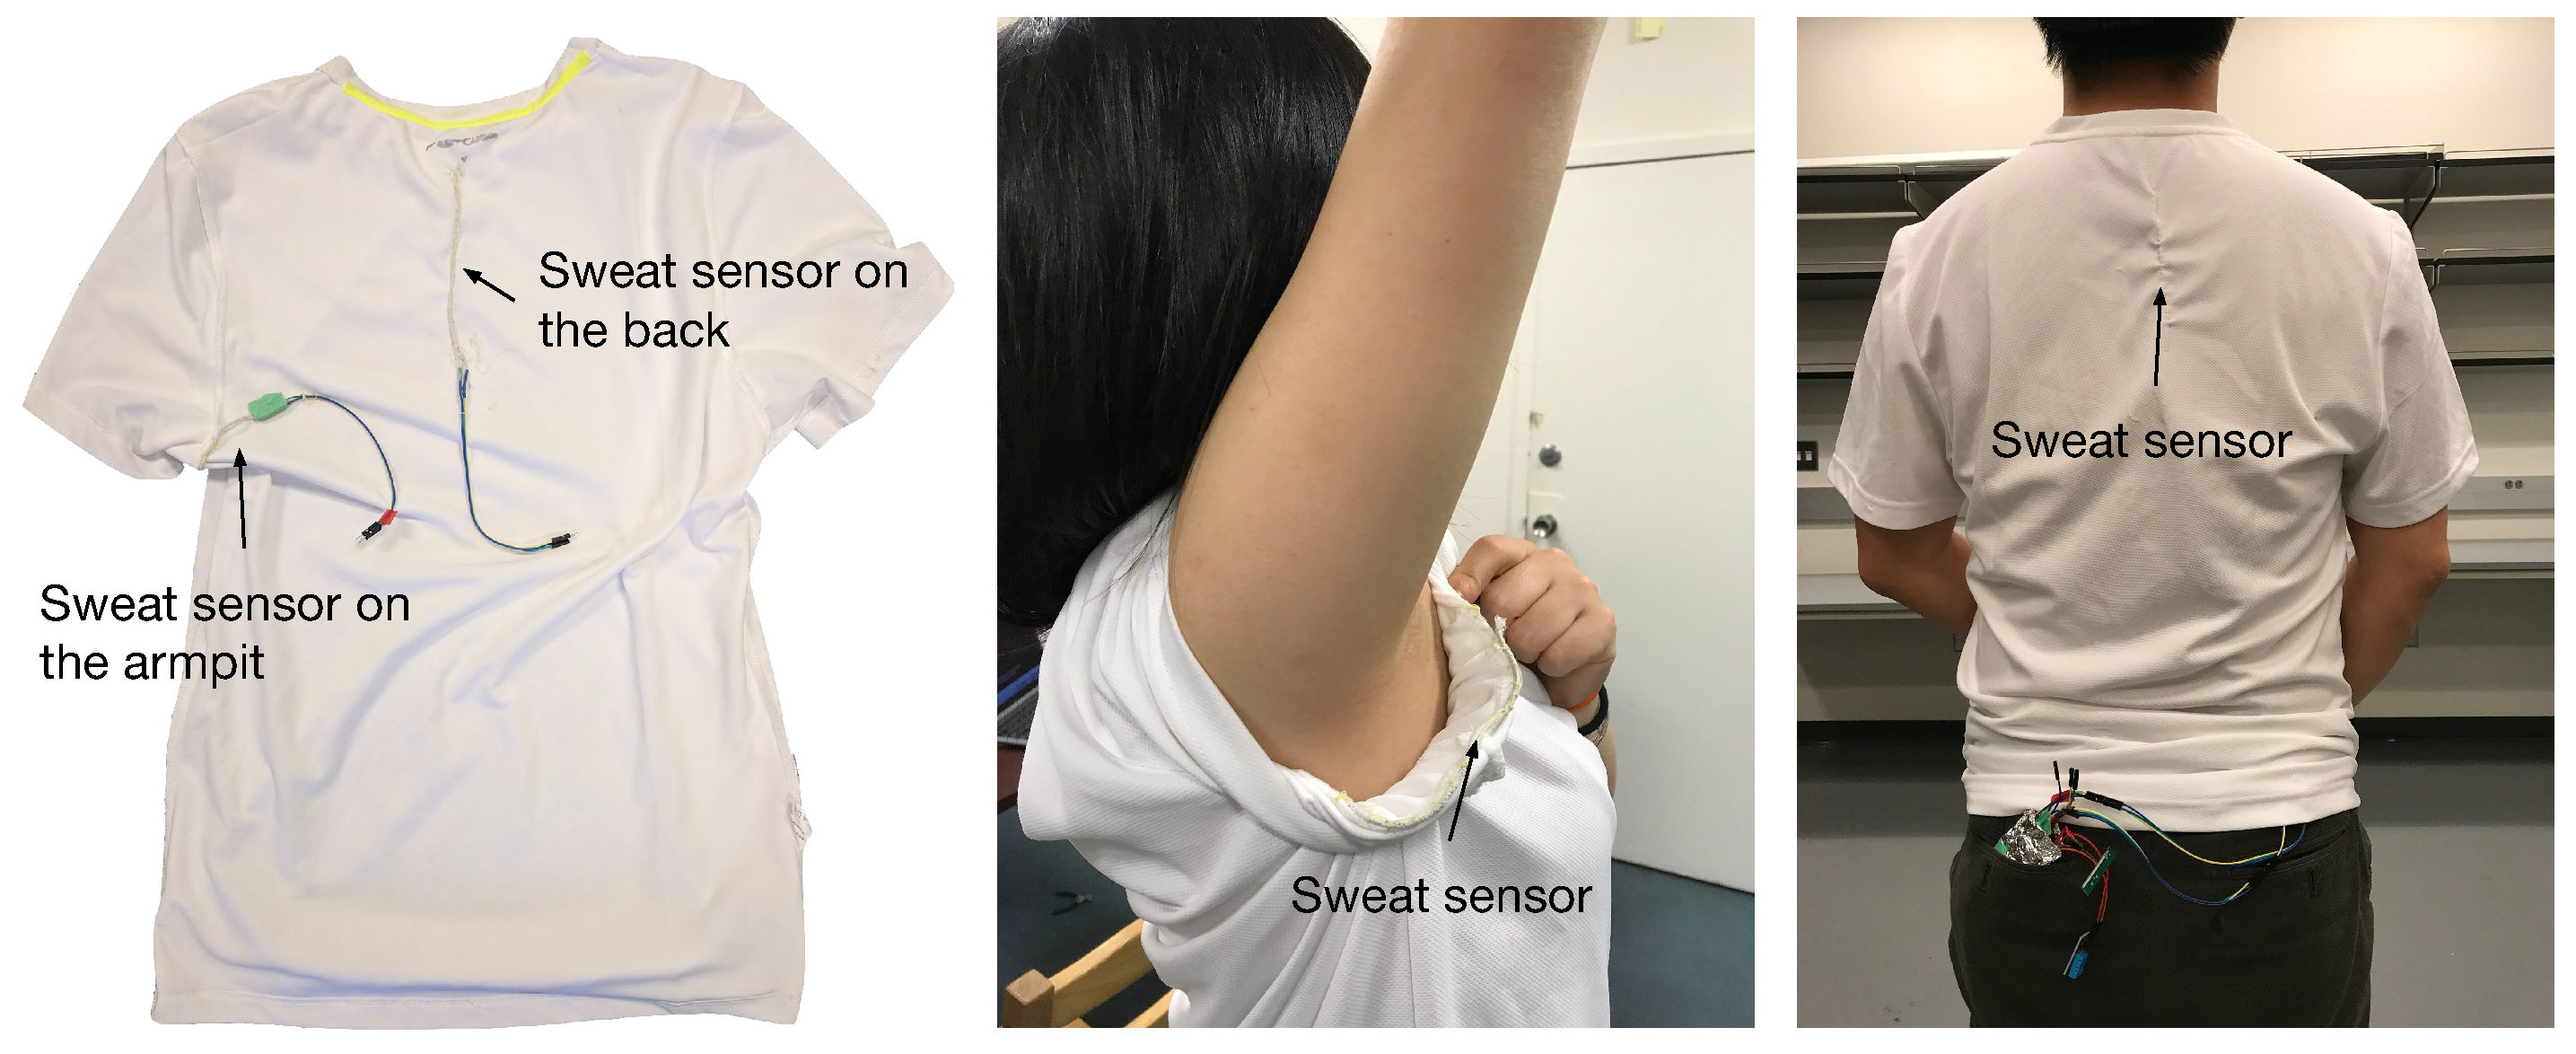 Sensors woven into a shirt can monitor vital signs, MIT News